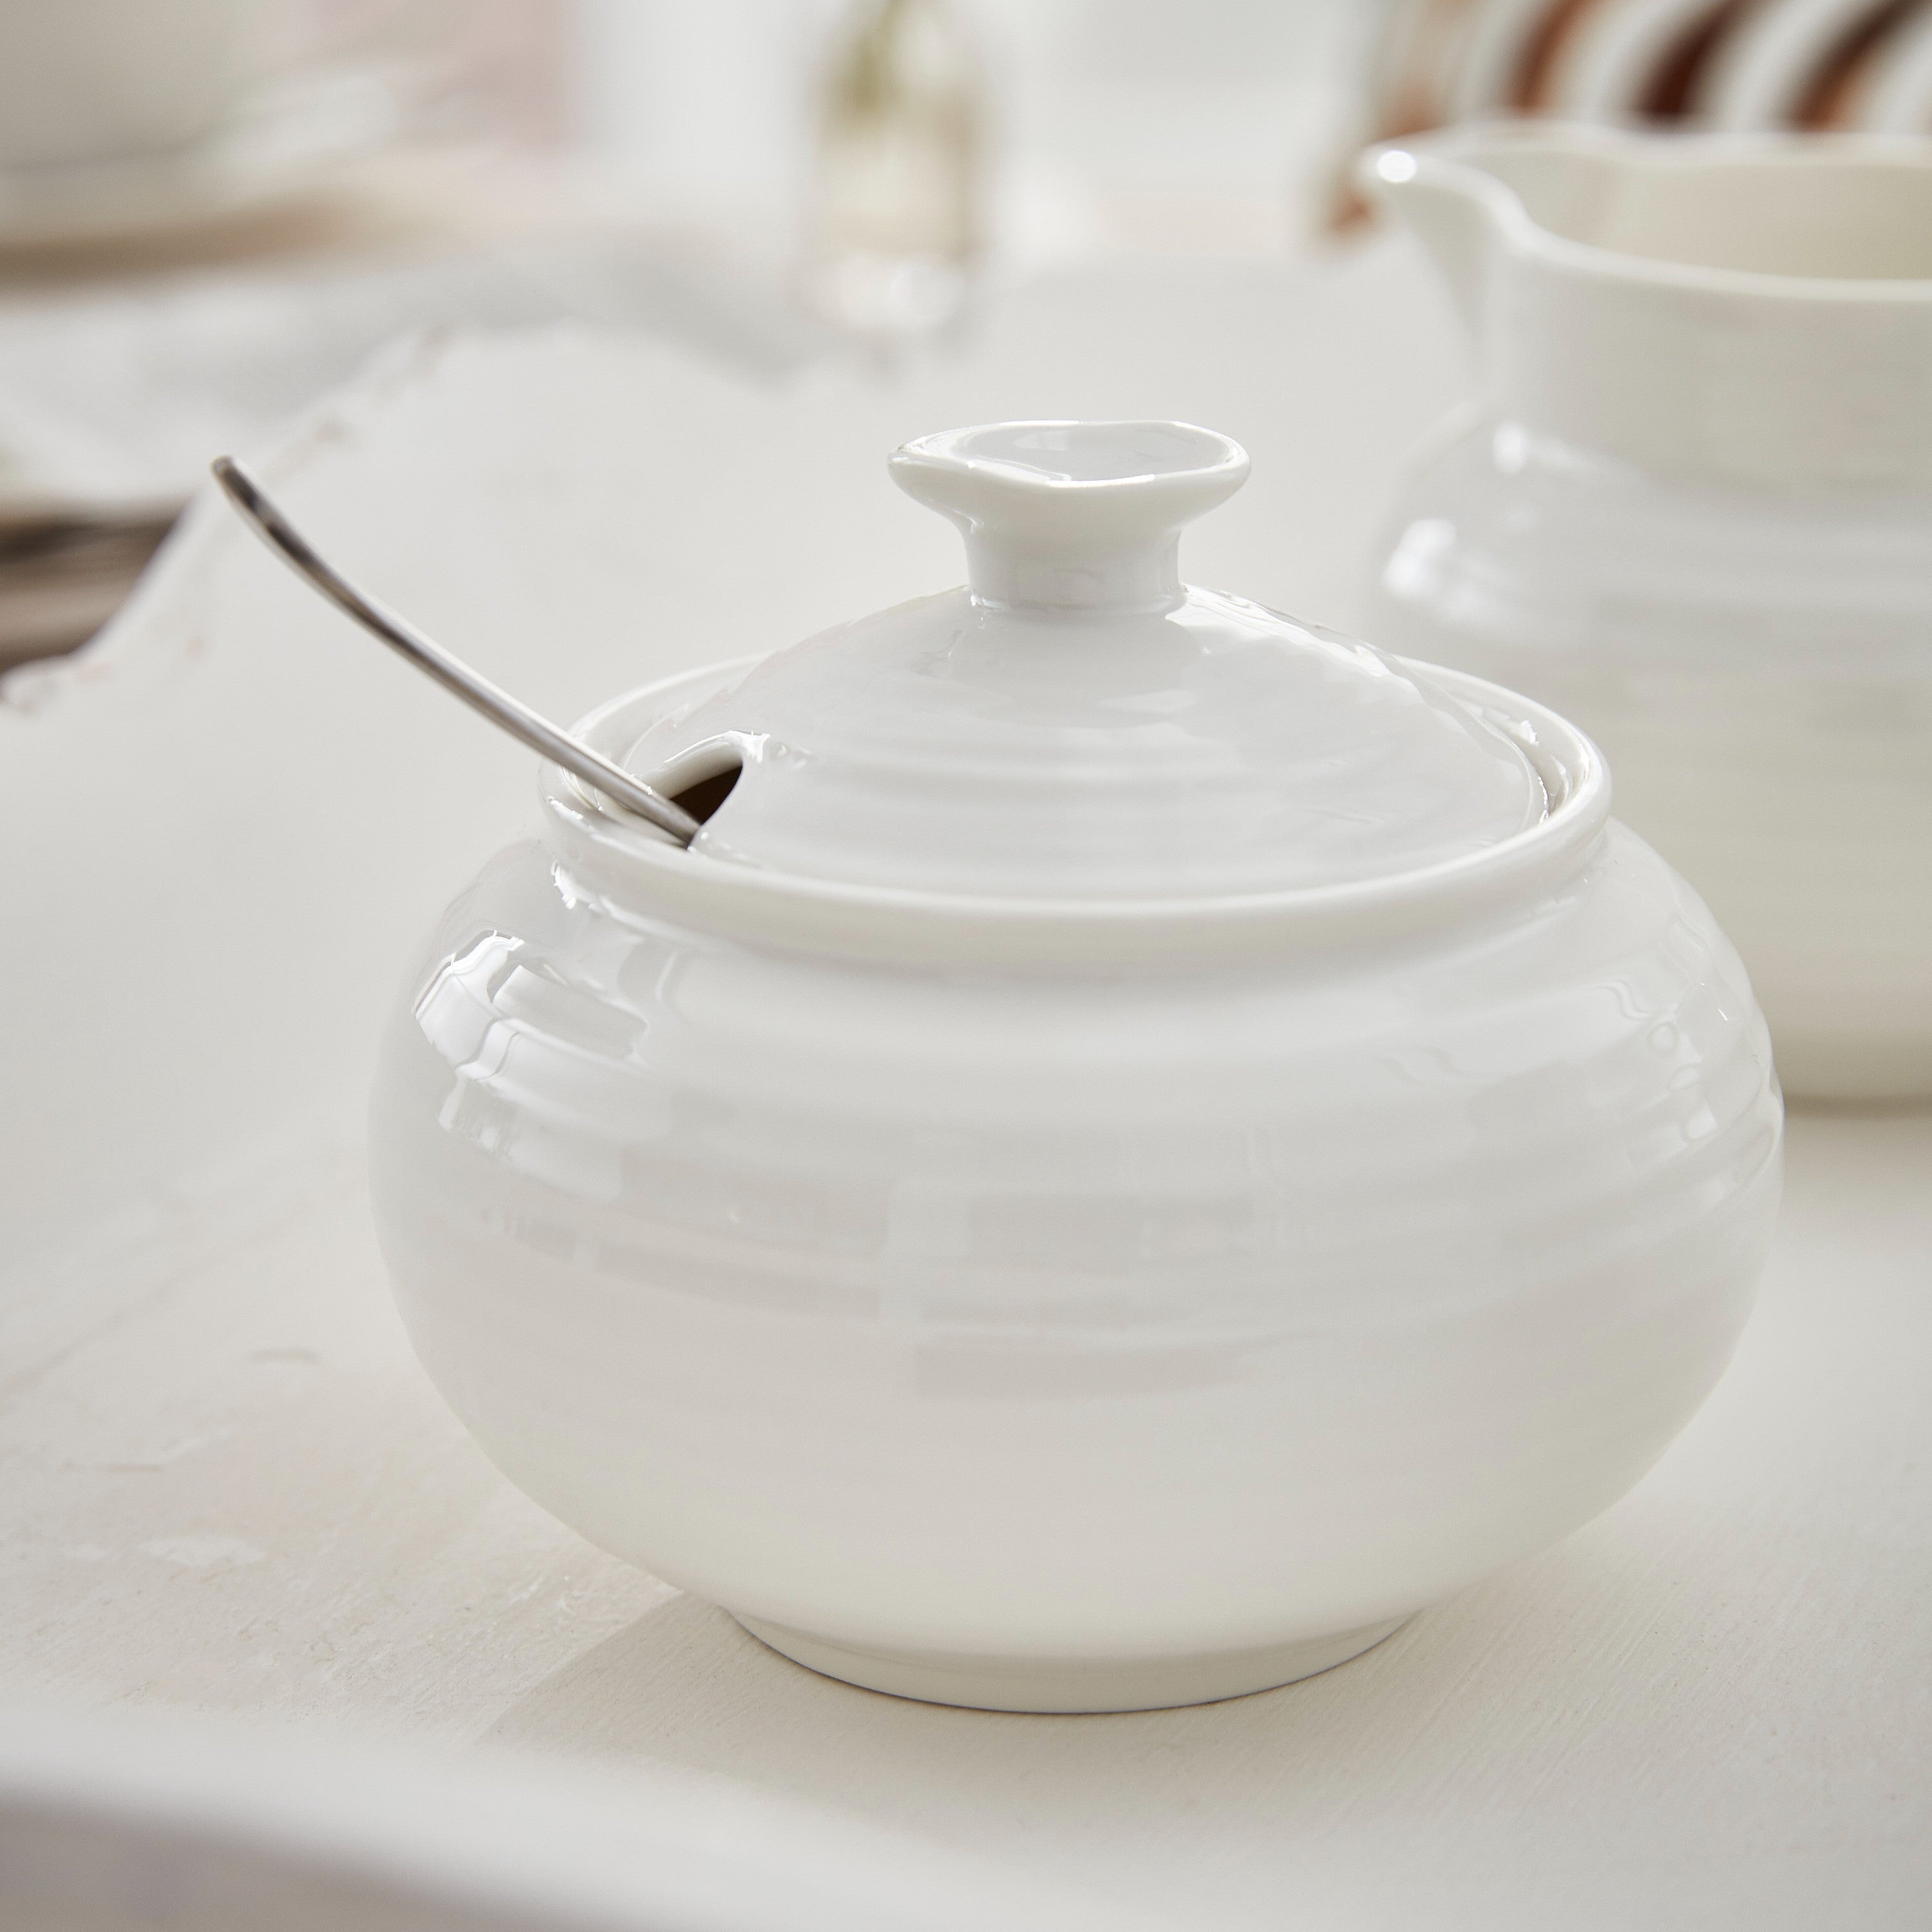 Photos - Serving Pieces Sugar Sophie Conran for Portmeirion Covered  Bowl White 